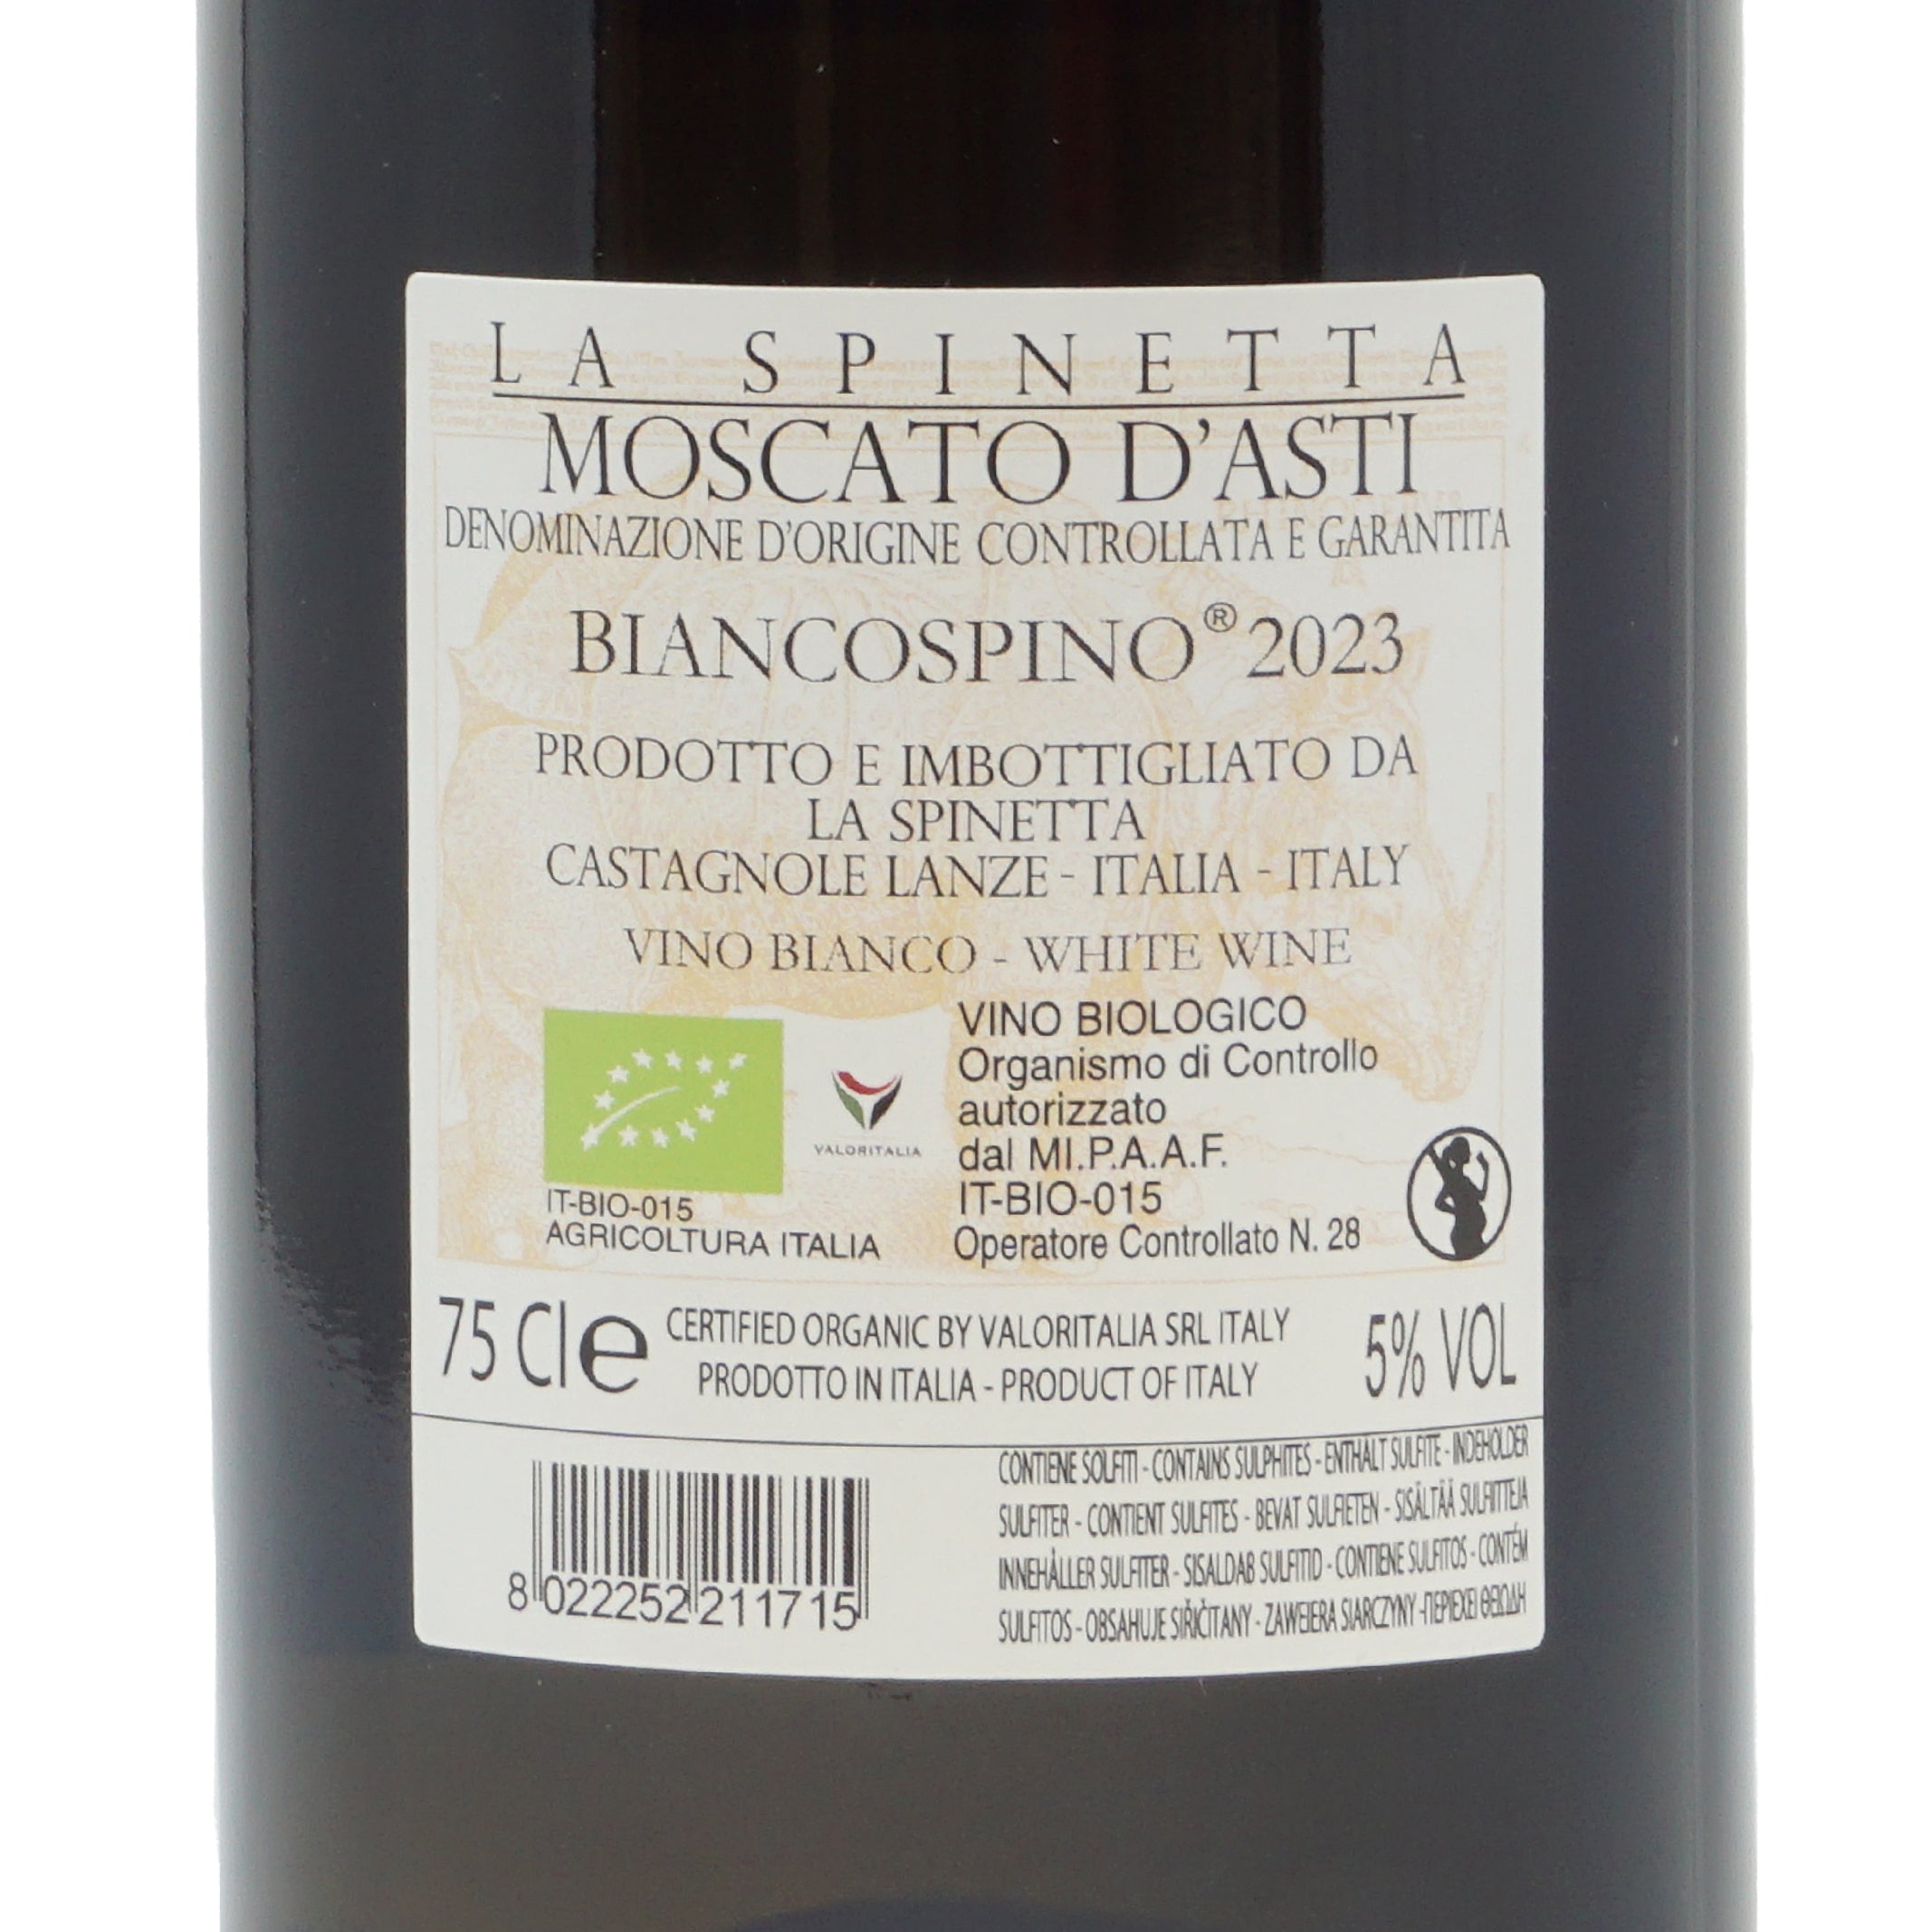 Moscato D'Asti Biancospino 2023 Docg La Spinetta lt.0,750